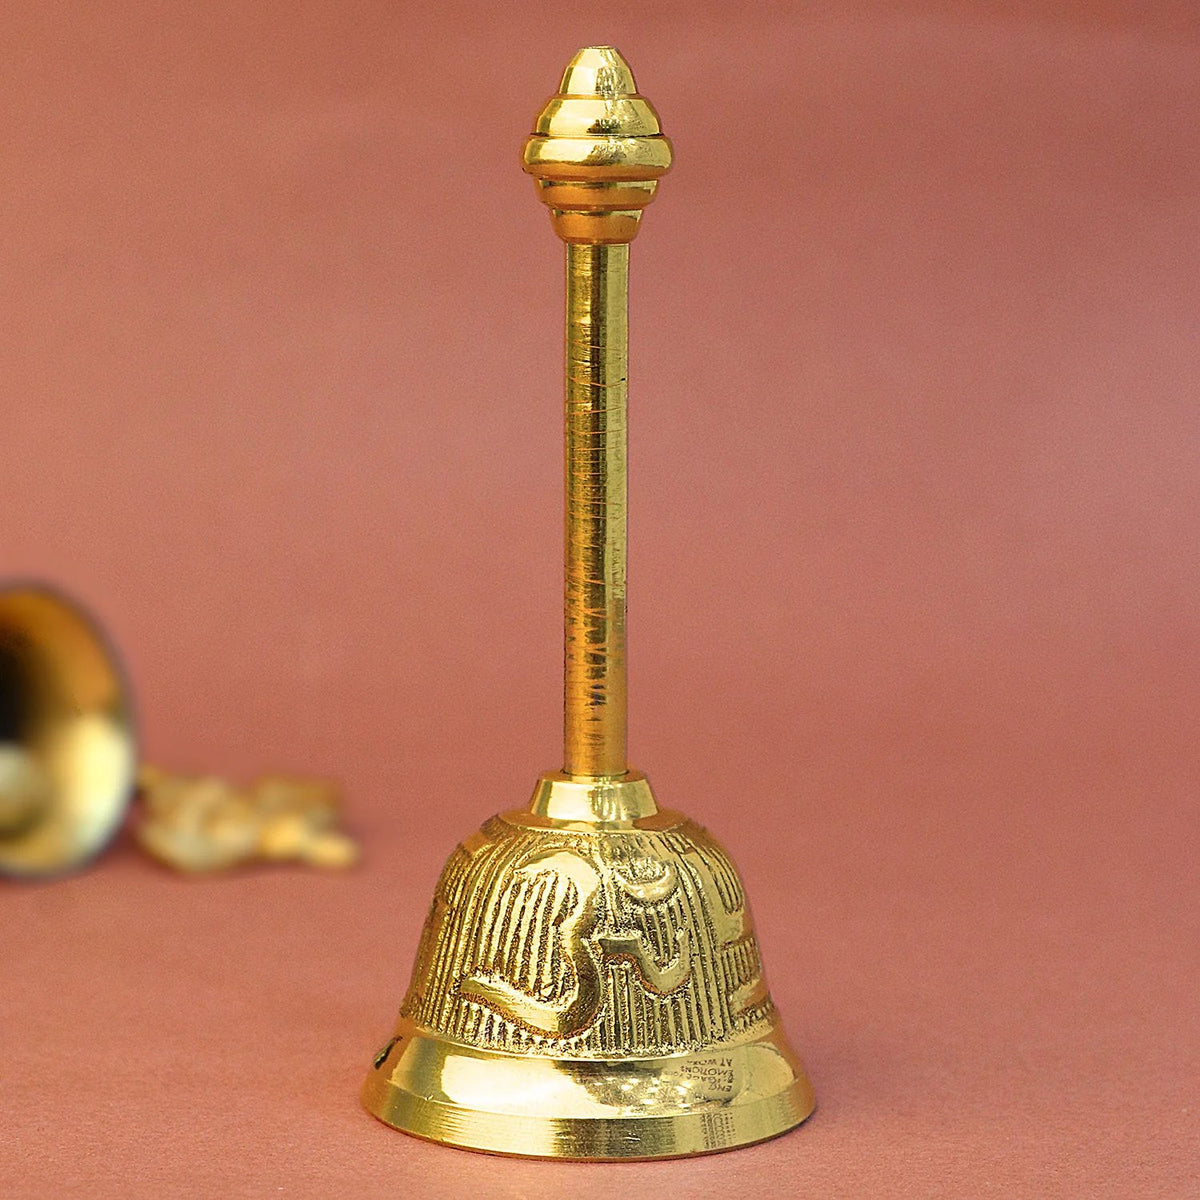 Brass Pooja Items at Rs 200 / Piece in Tiruchirappalli